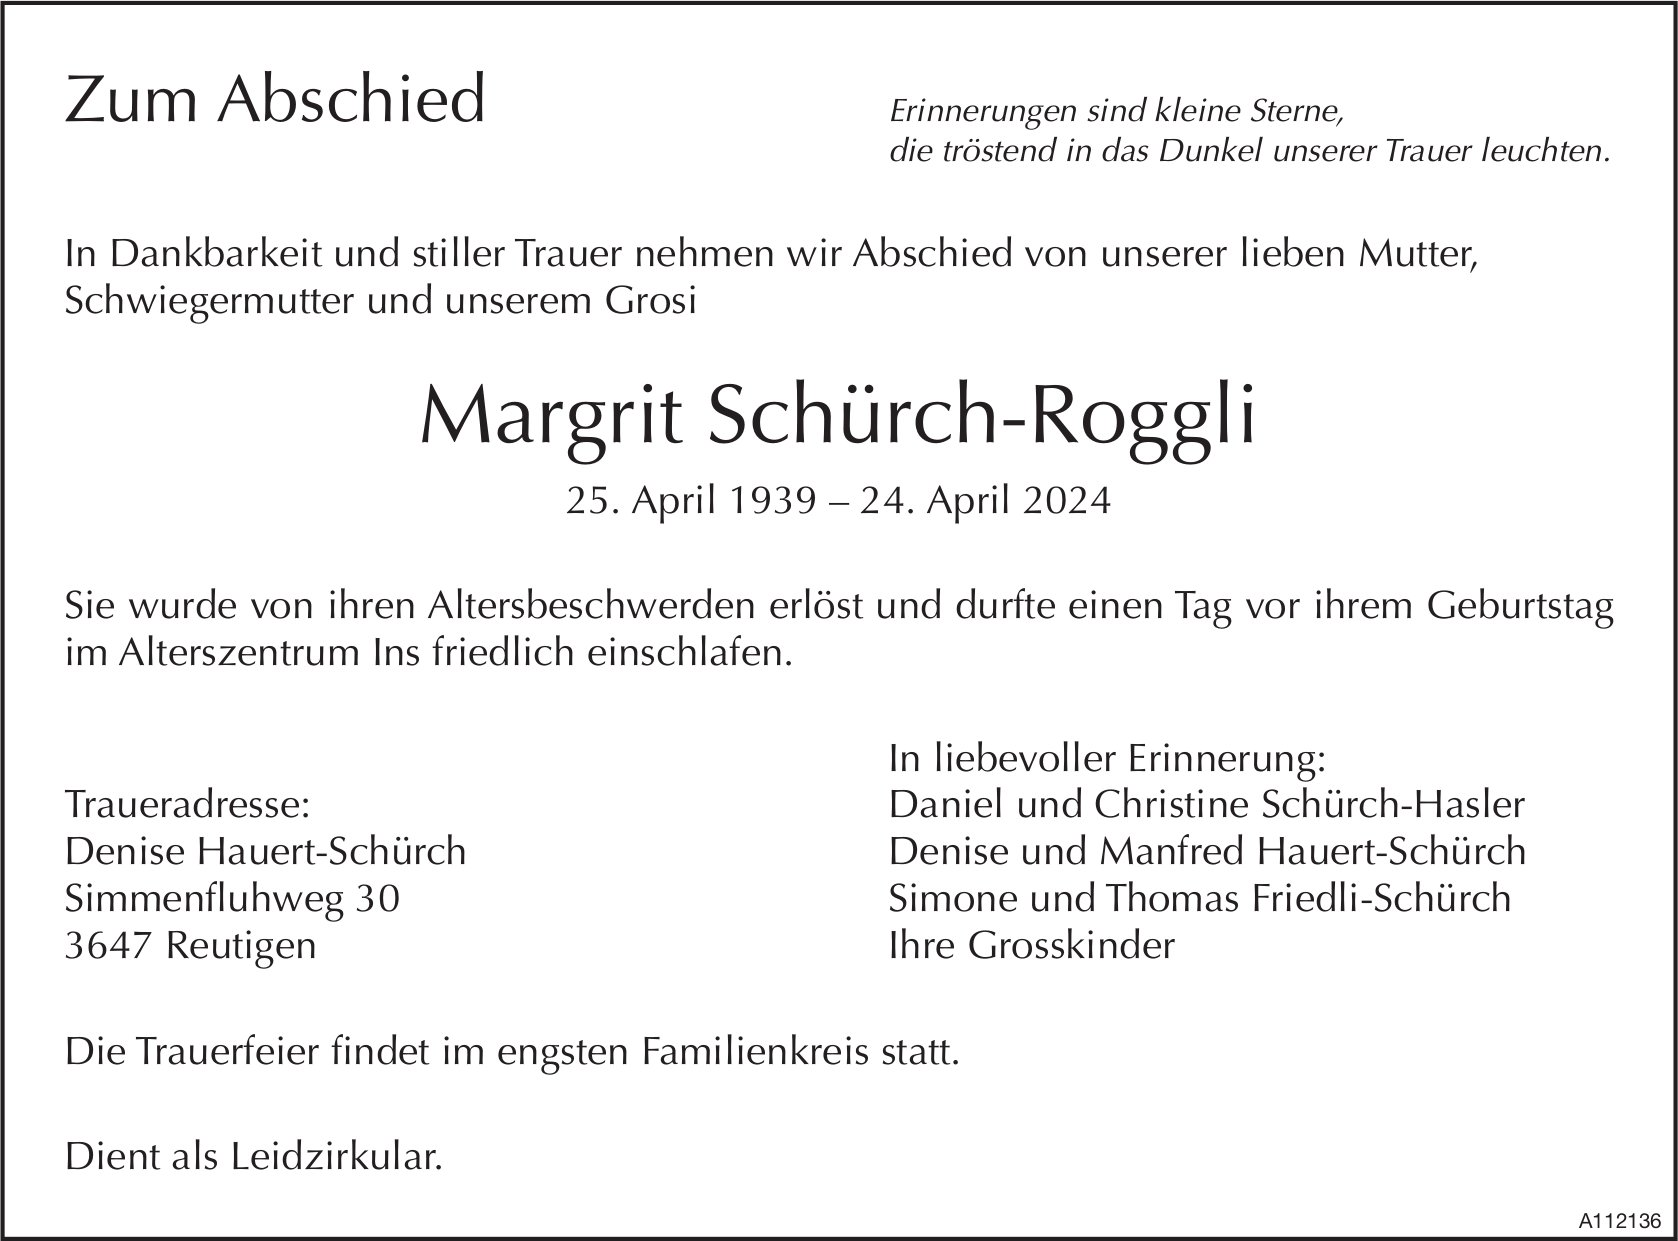 Margrit Schürch-Roggli, April 2024 / TA